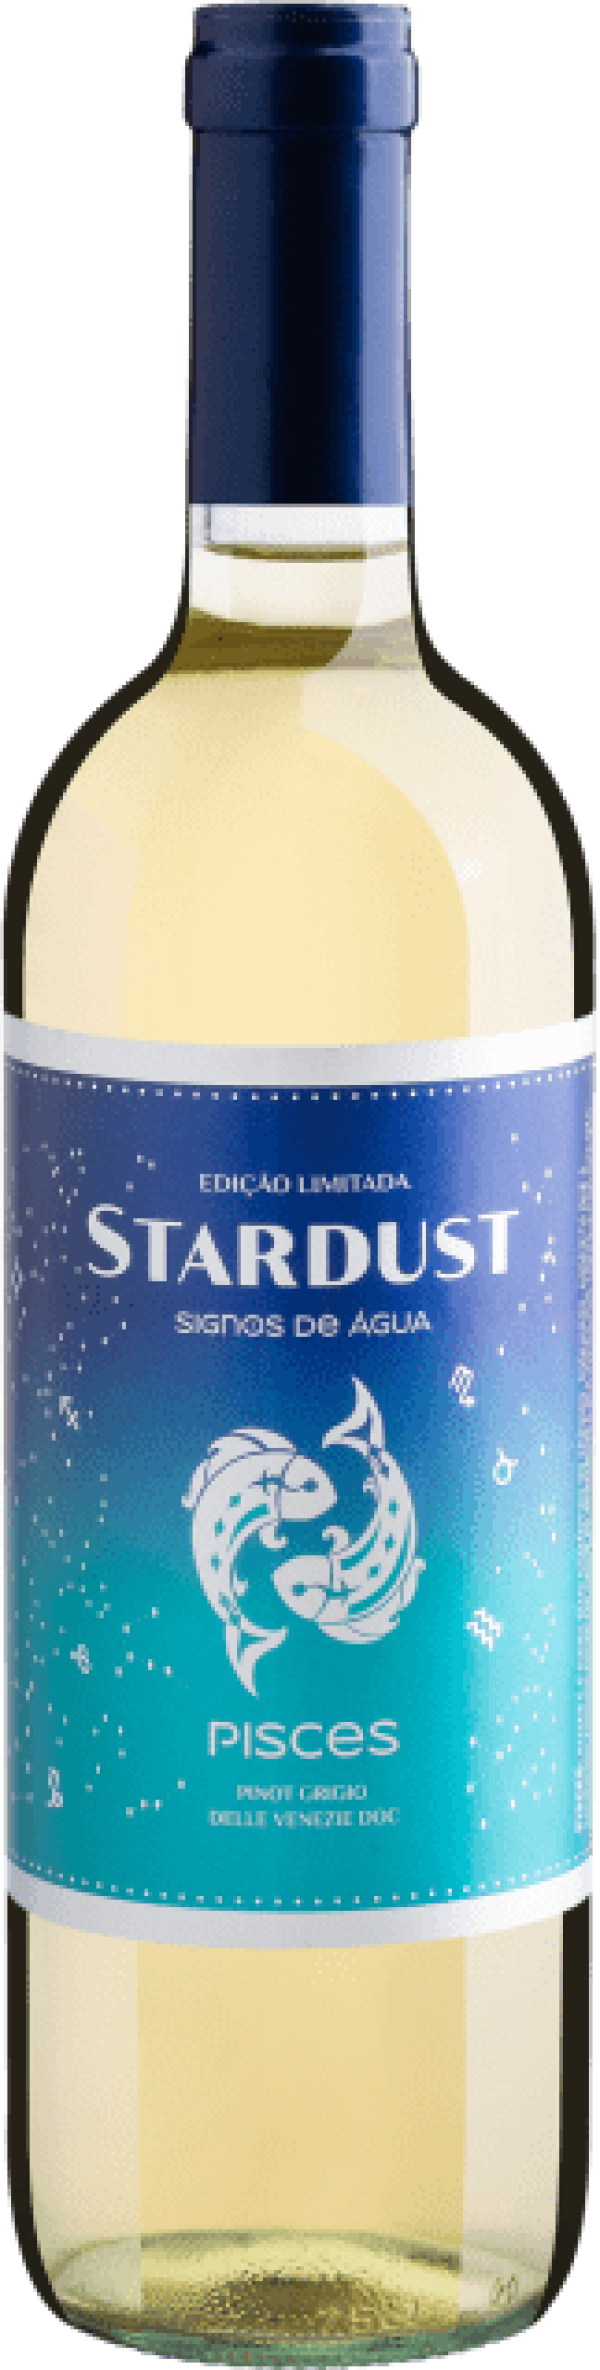 Stardust Edição Limitada Pisces Pinot Grigio Delle Venezie DOC 2020